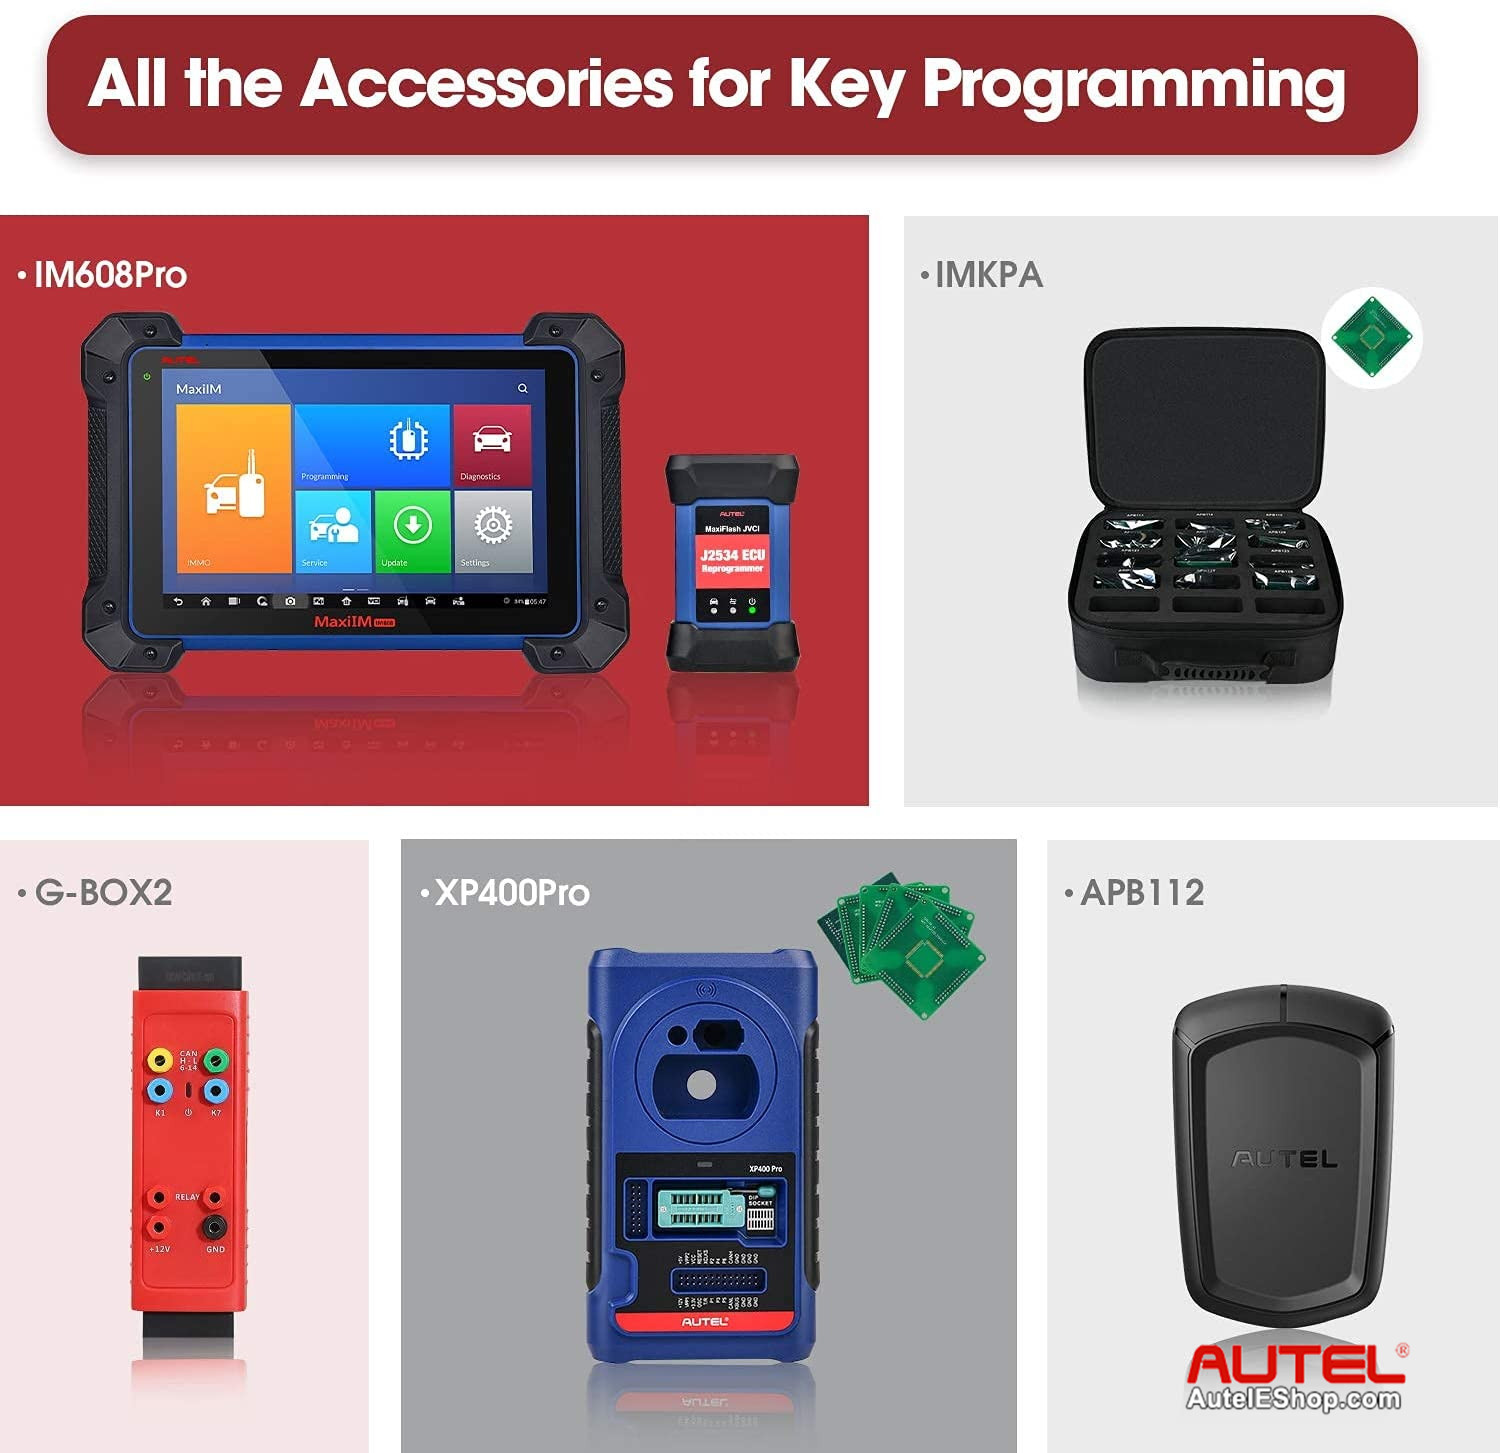 Autel MaxiIM IM608PRO Plus IMKPA Accessories Get G-Box2 and APB112